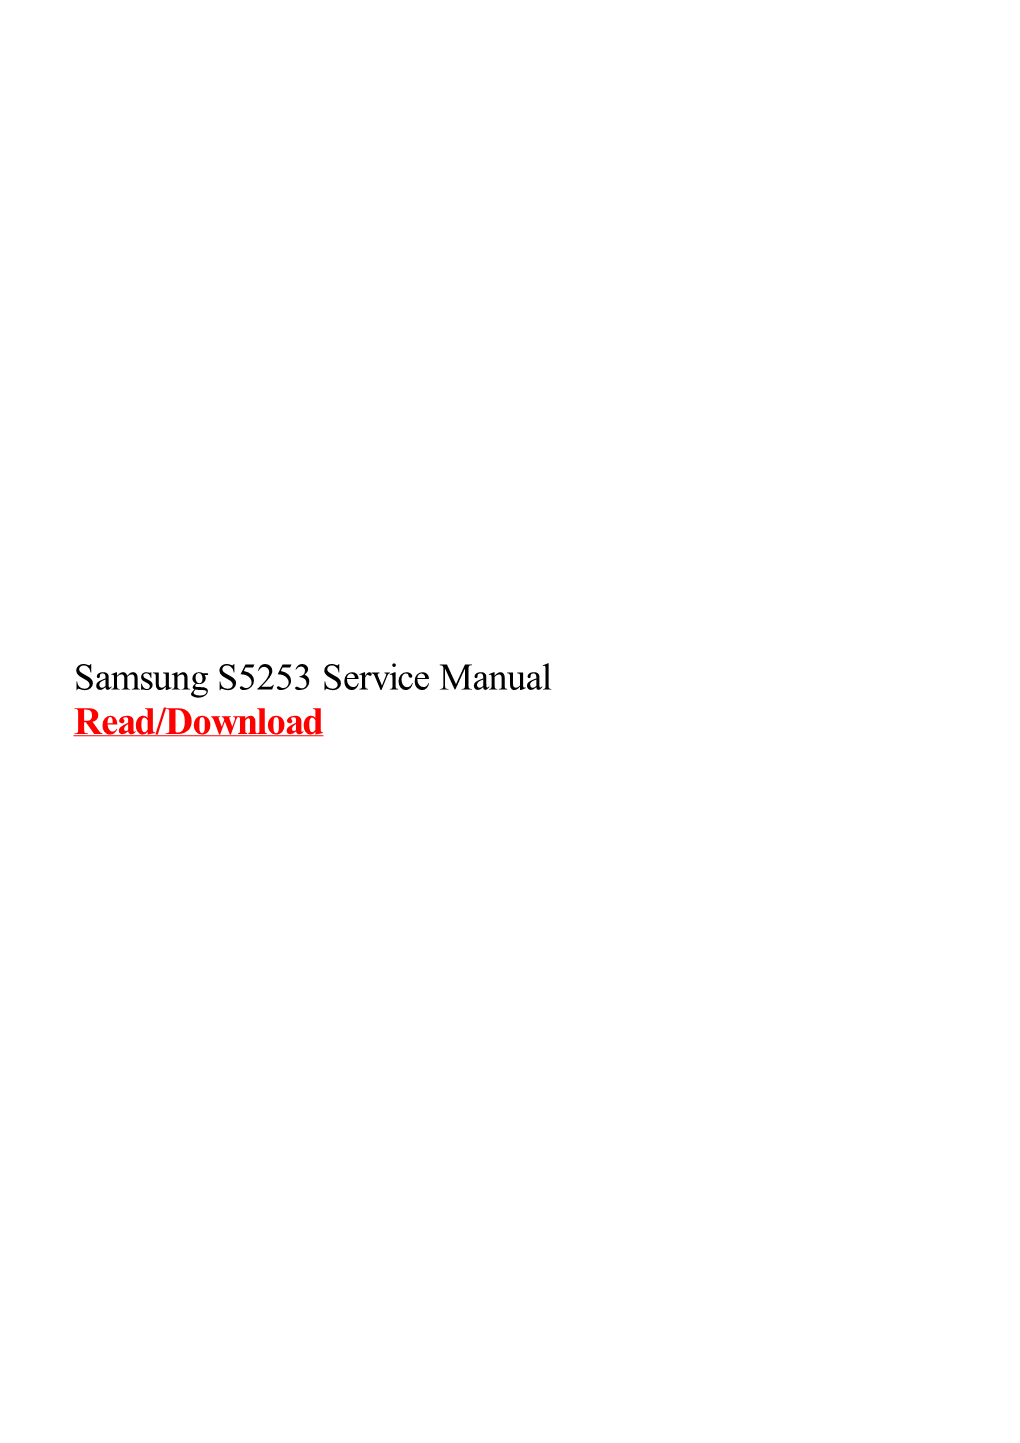 Samsung S5253 Service Manual